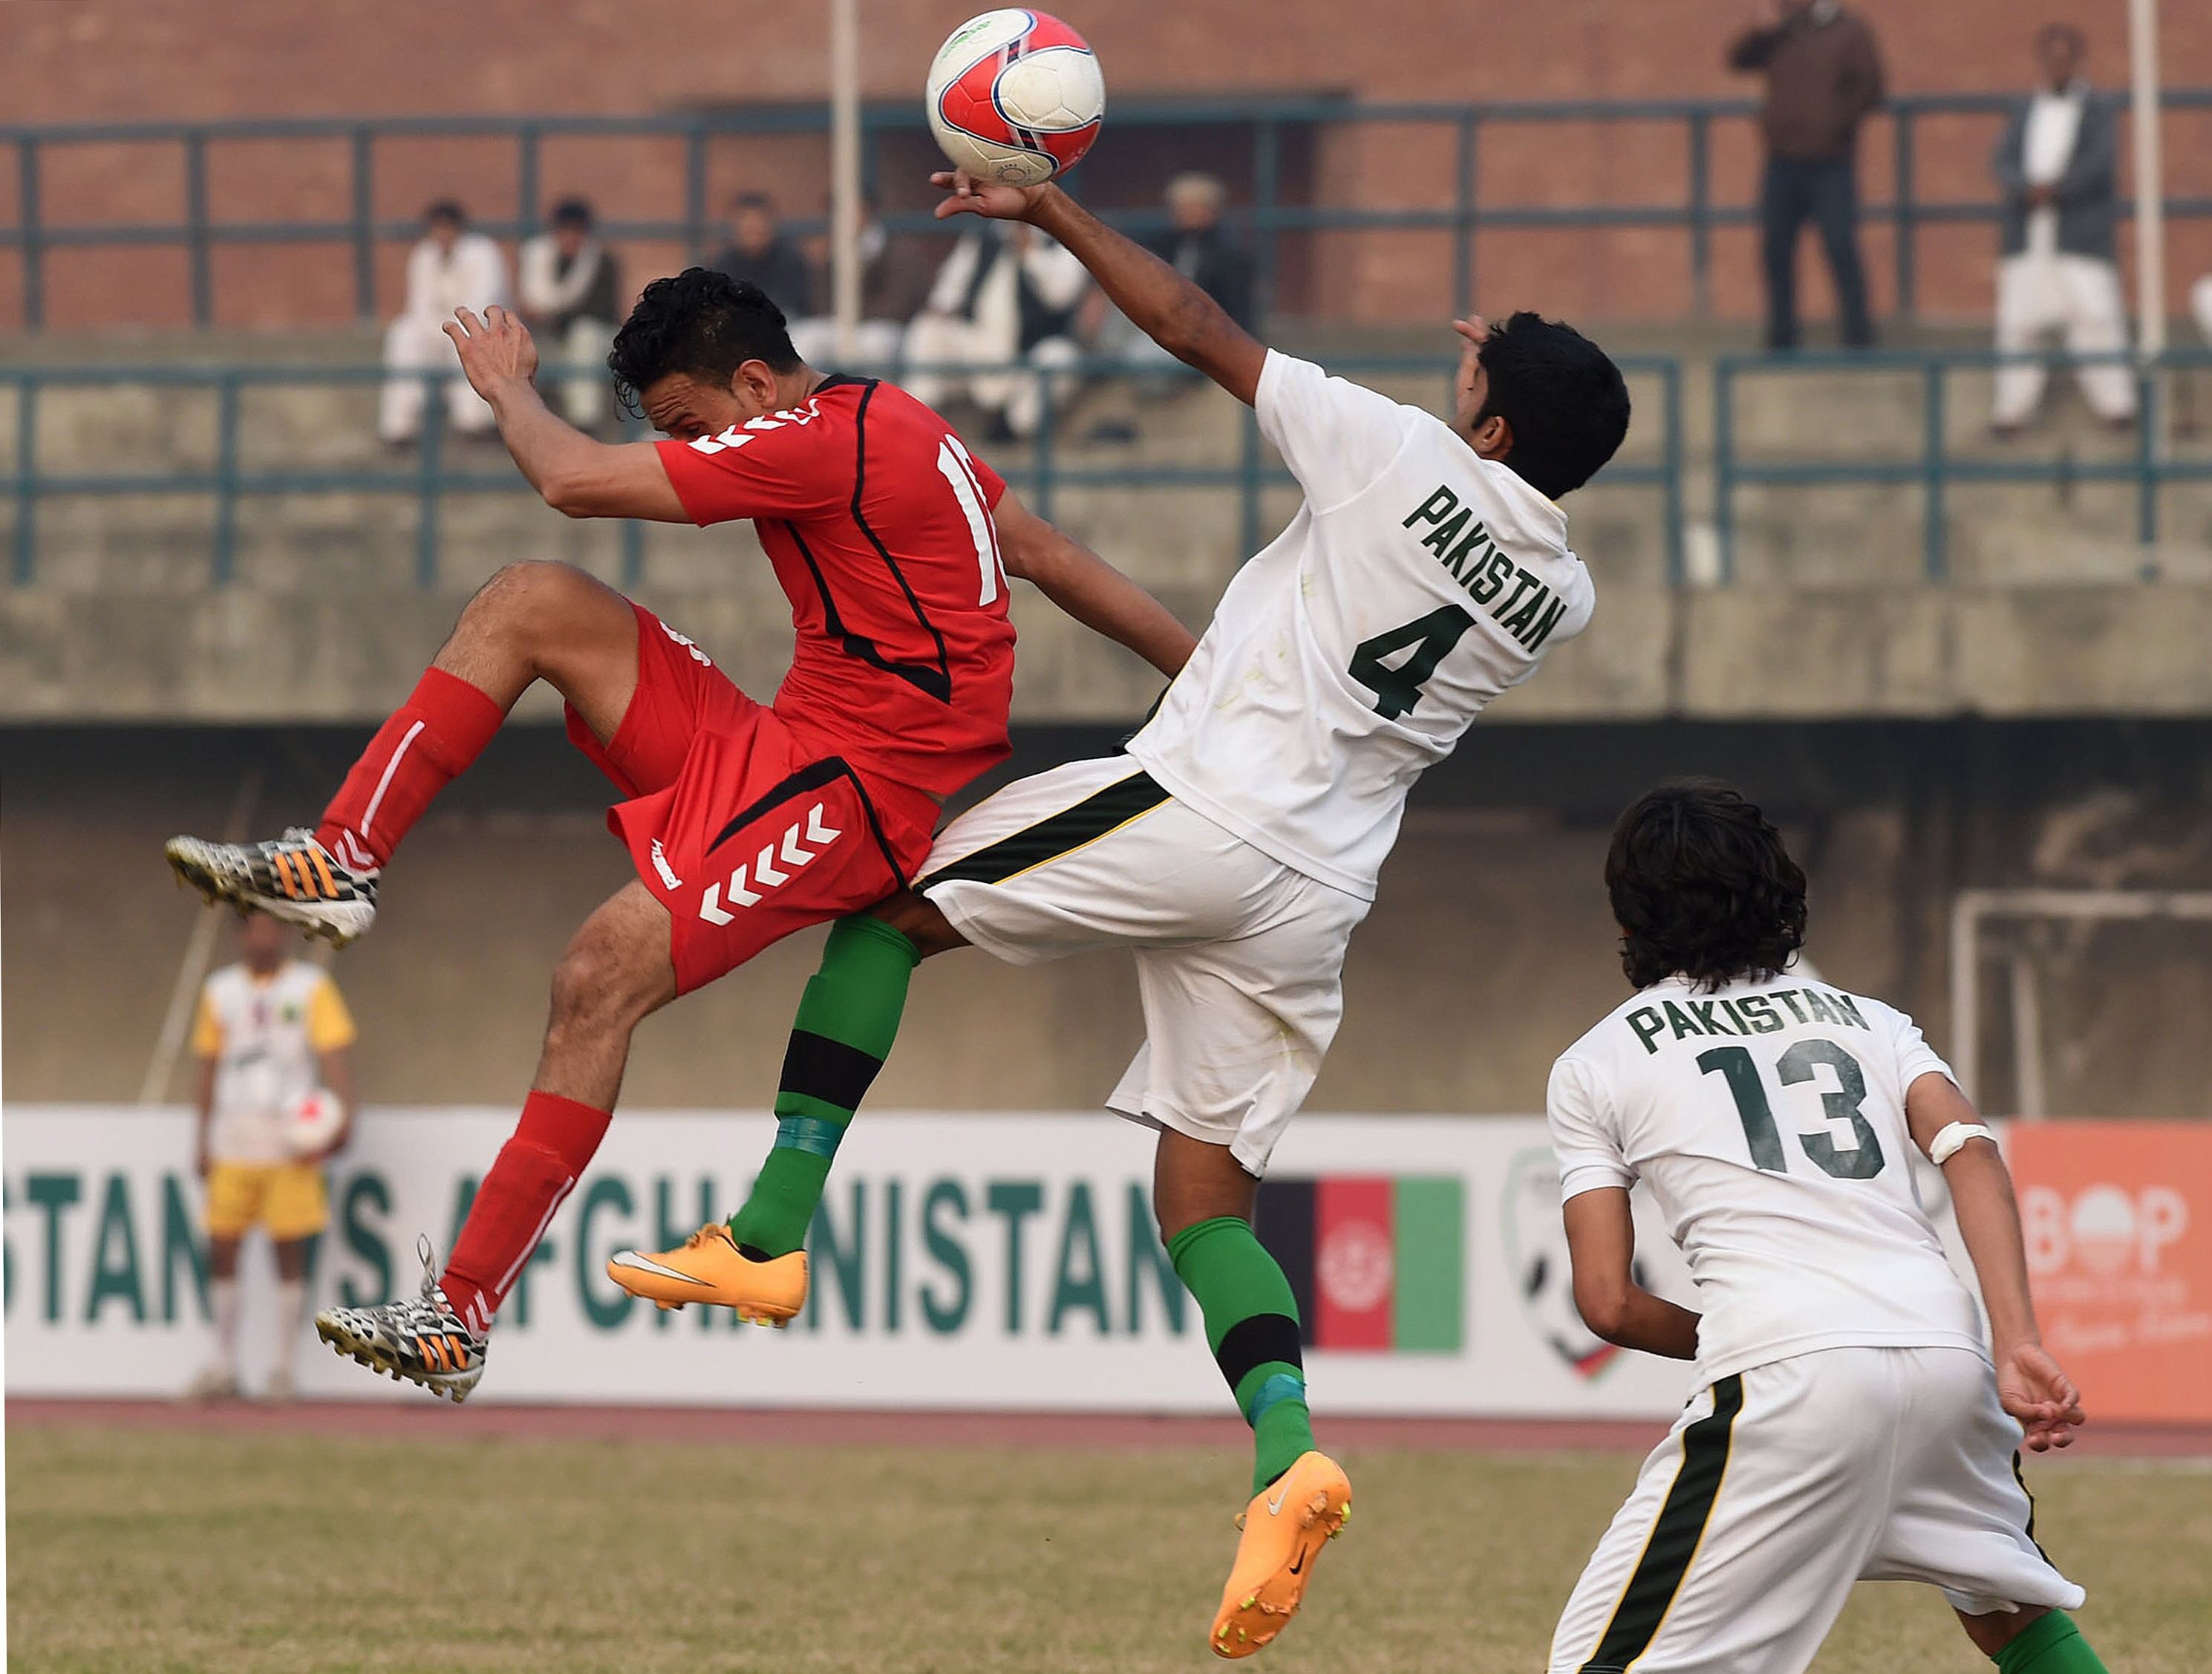 football in pakistan essay